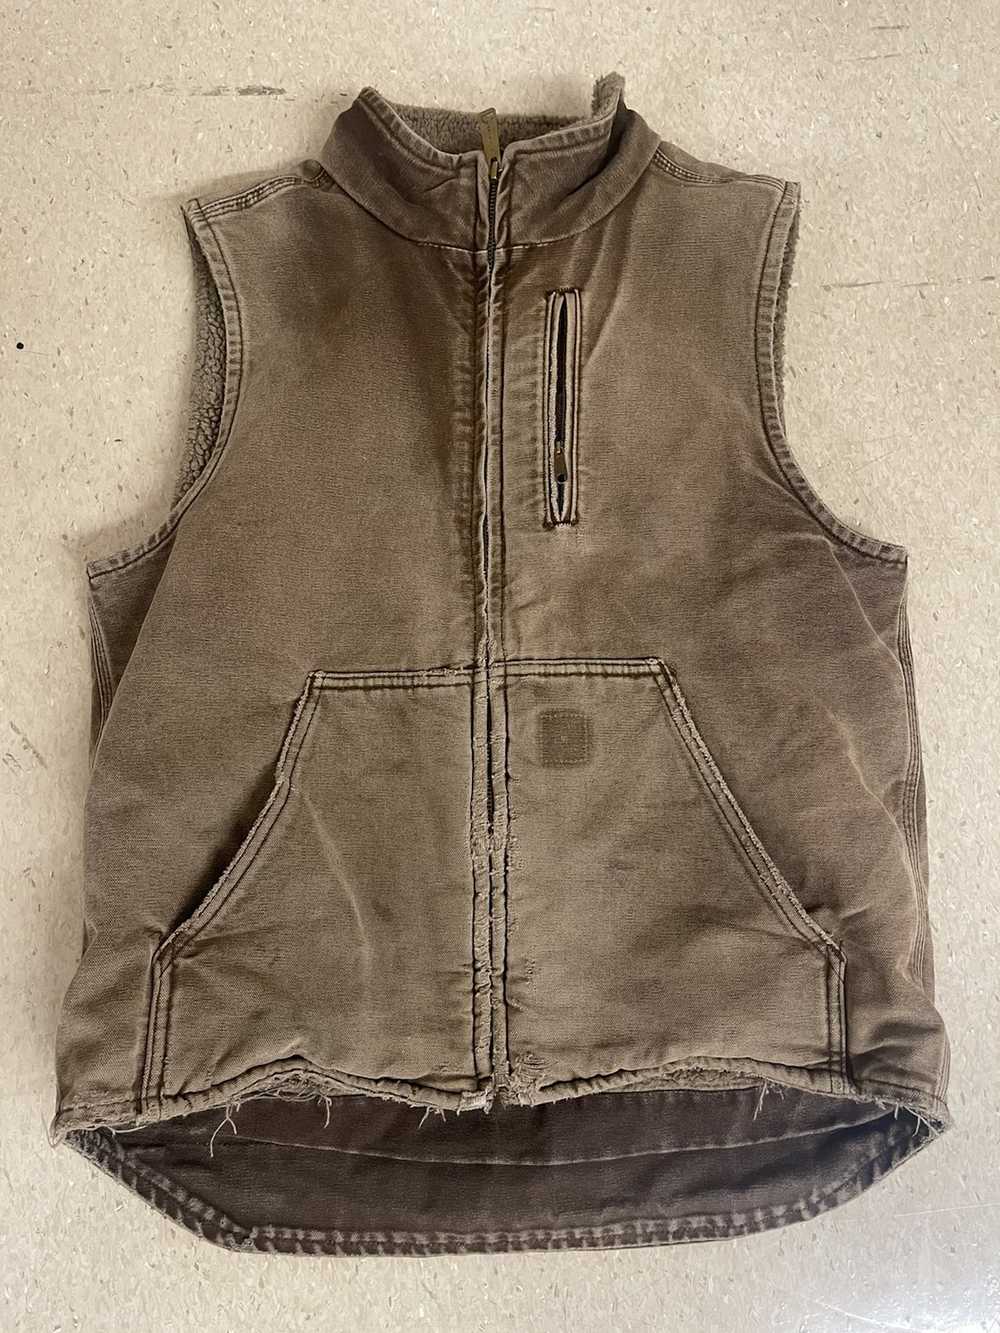 Carhartt Vintage Distressed Carhartt Vest - image 1